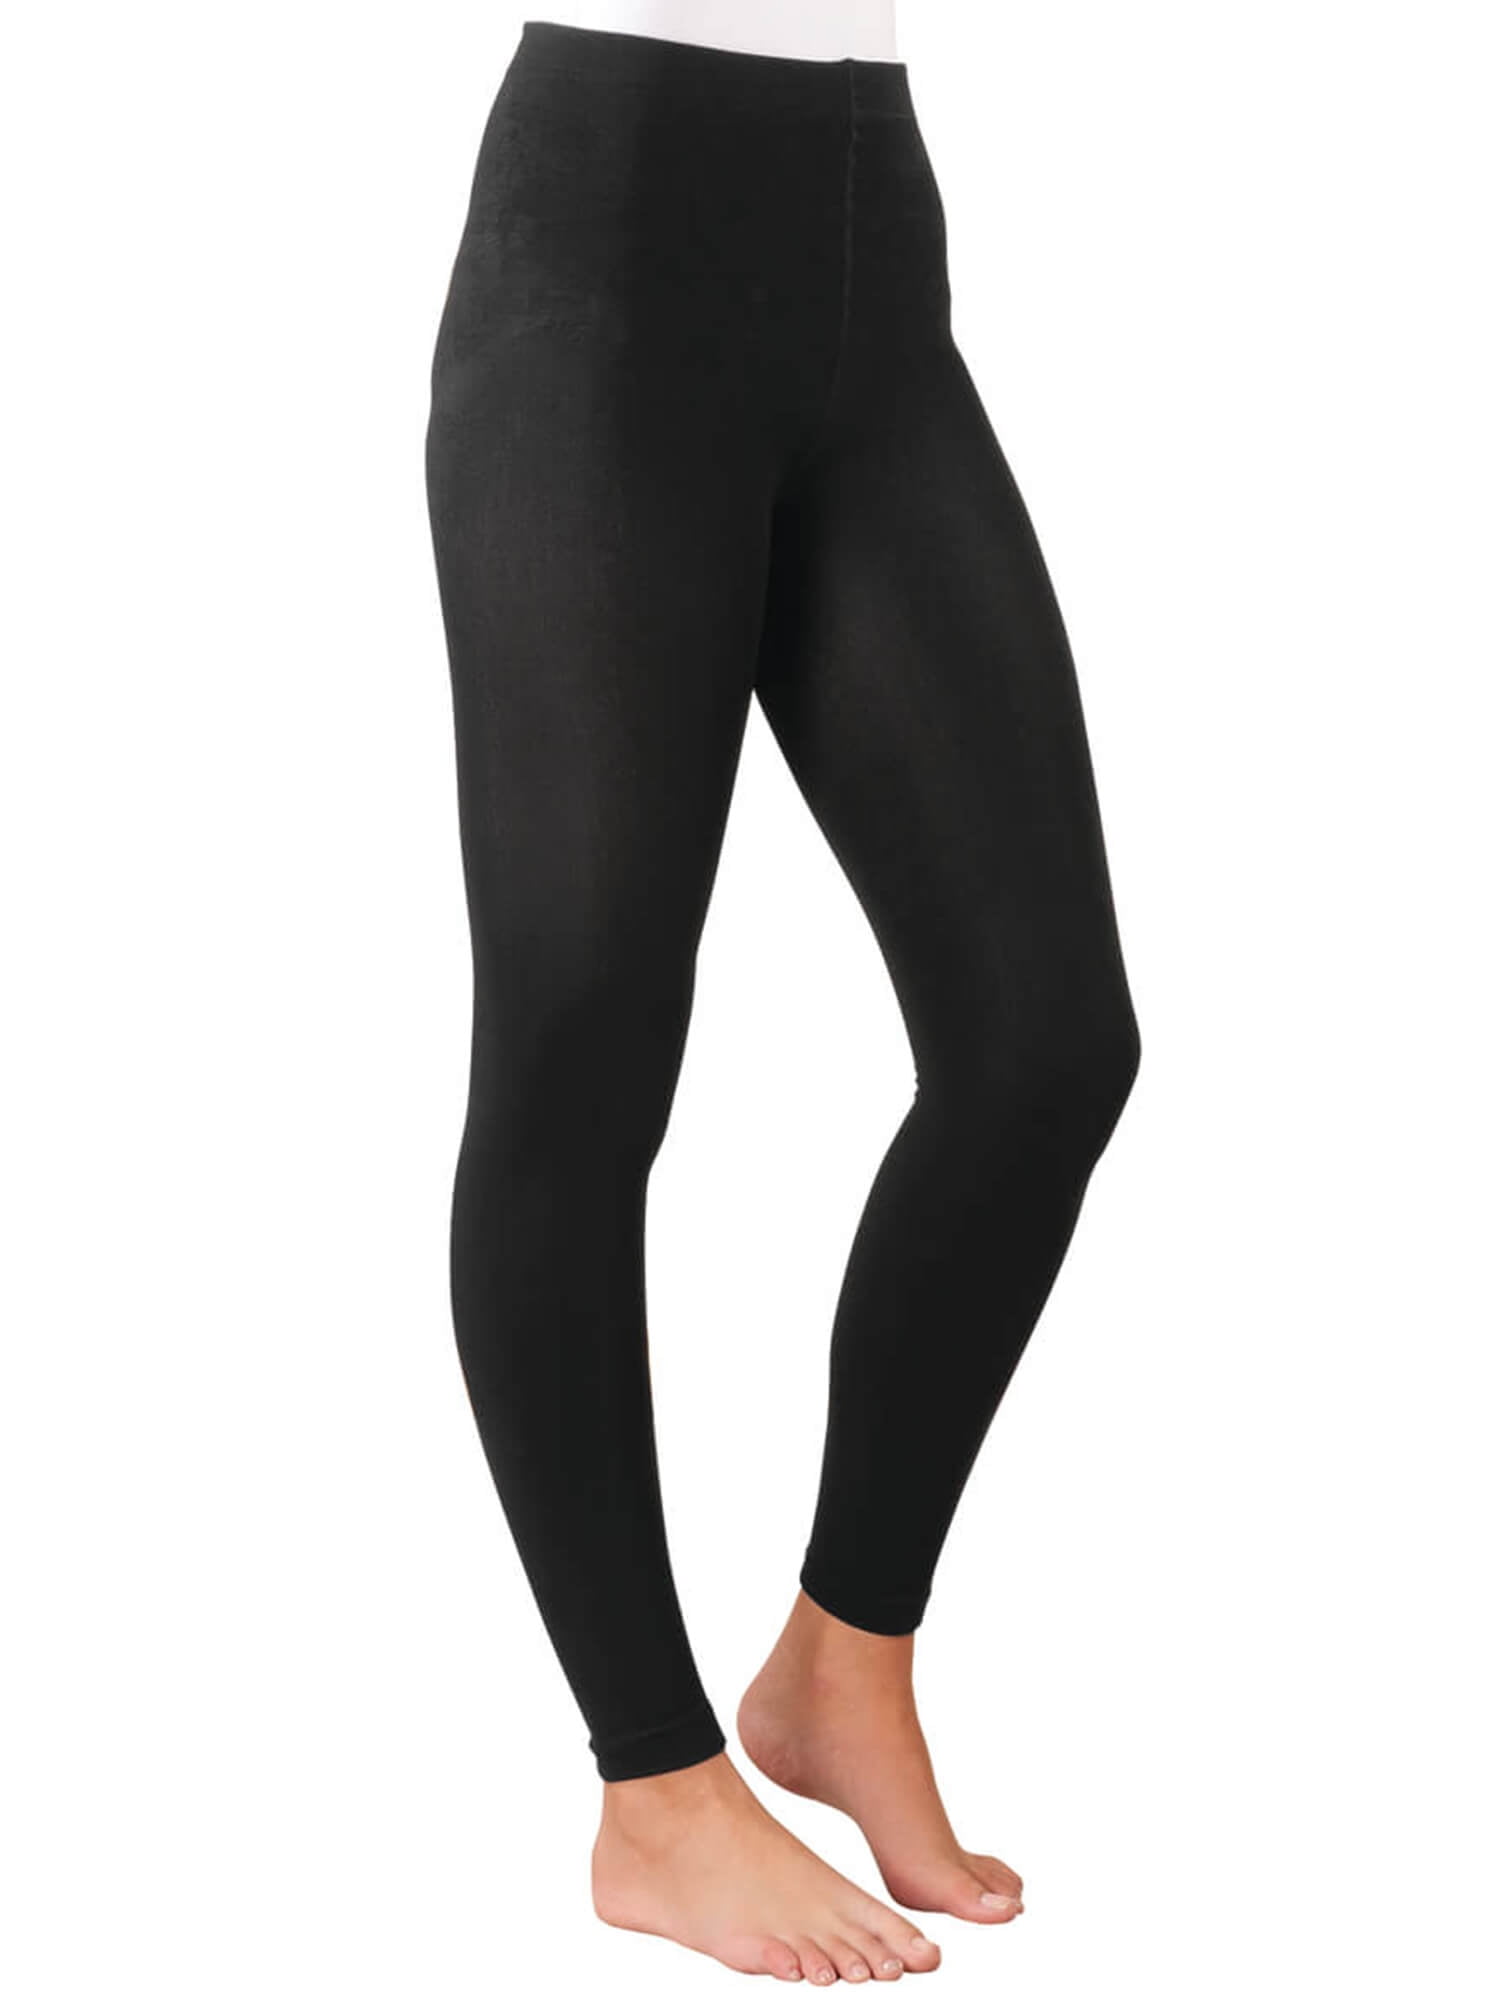 Fleece Lined Leggings by Sawyer Creek, Premium Fabric Blend, Stretchy for  Comfort - Medium/Tall, Black